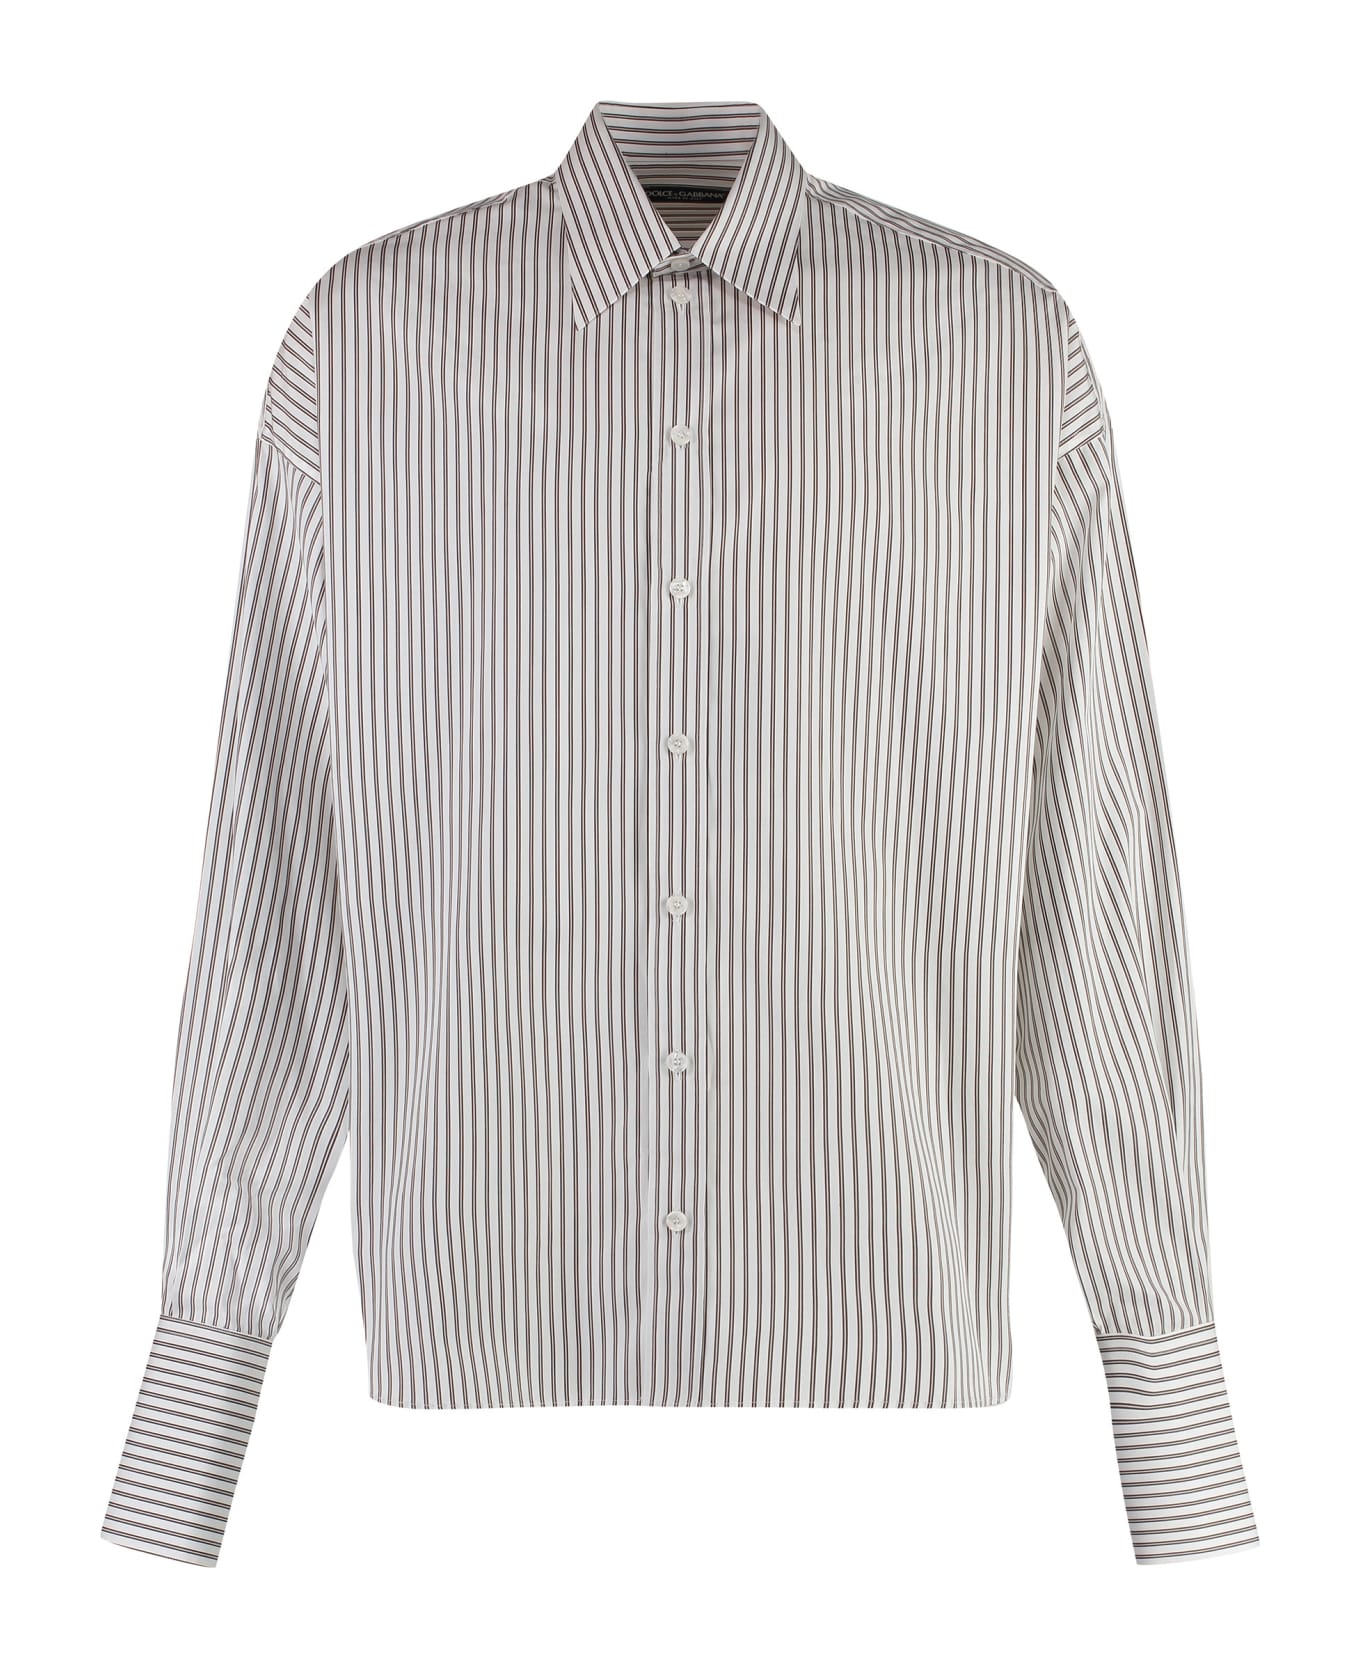 Dolce & Gabbana Striped Cotton Shirt - Rigato